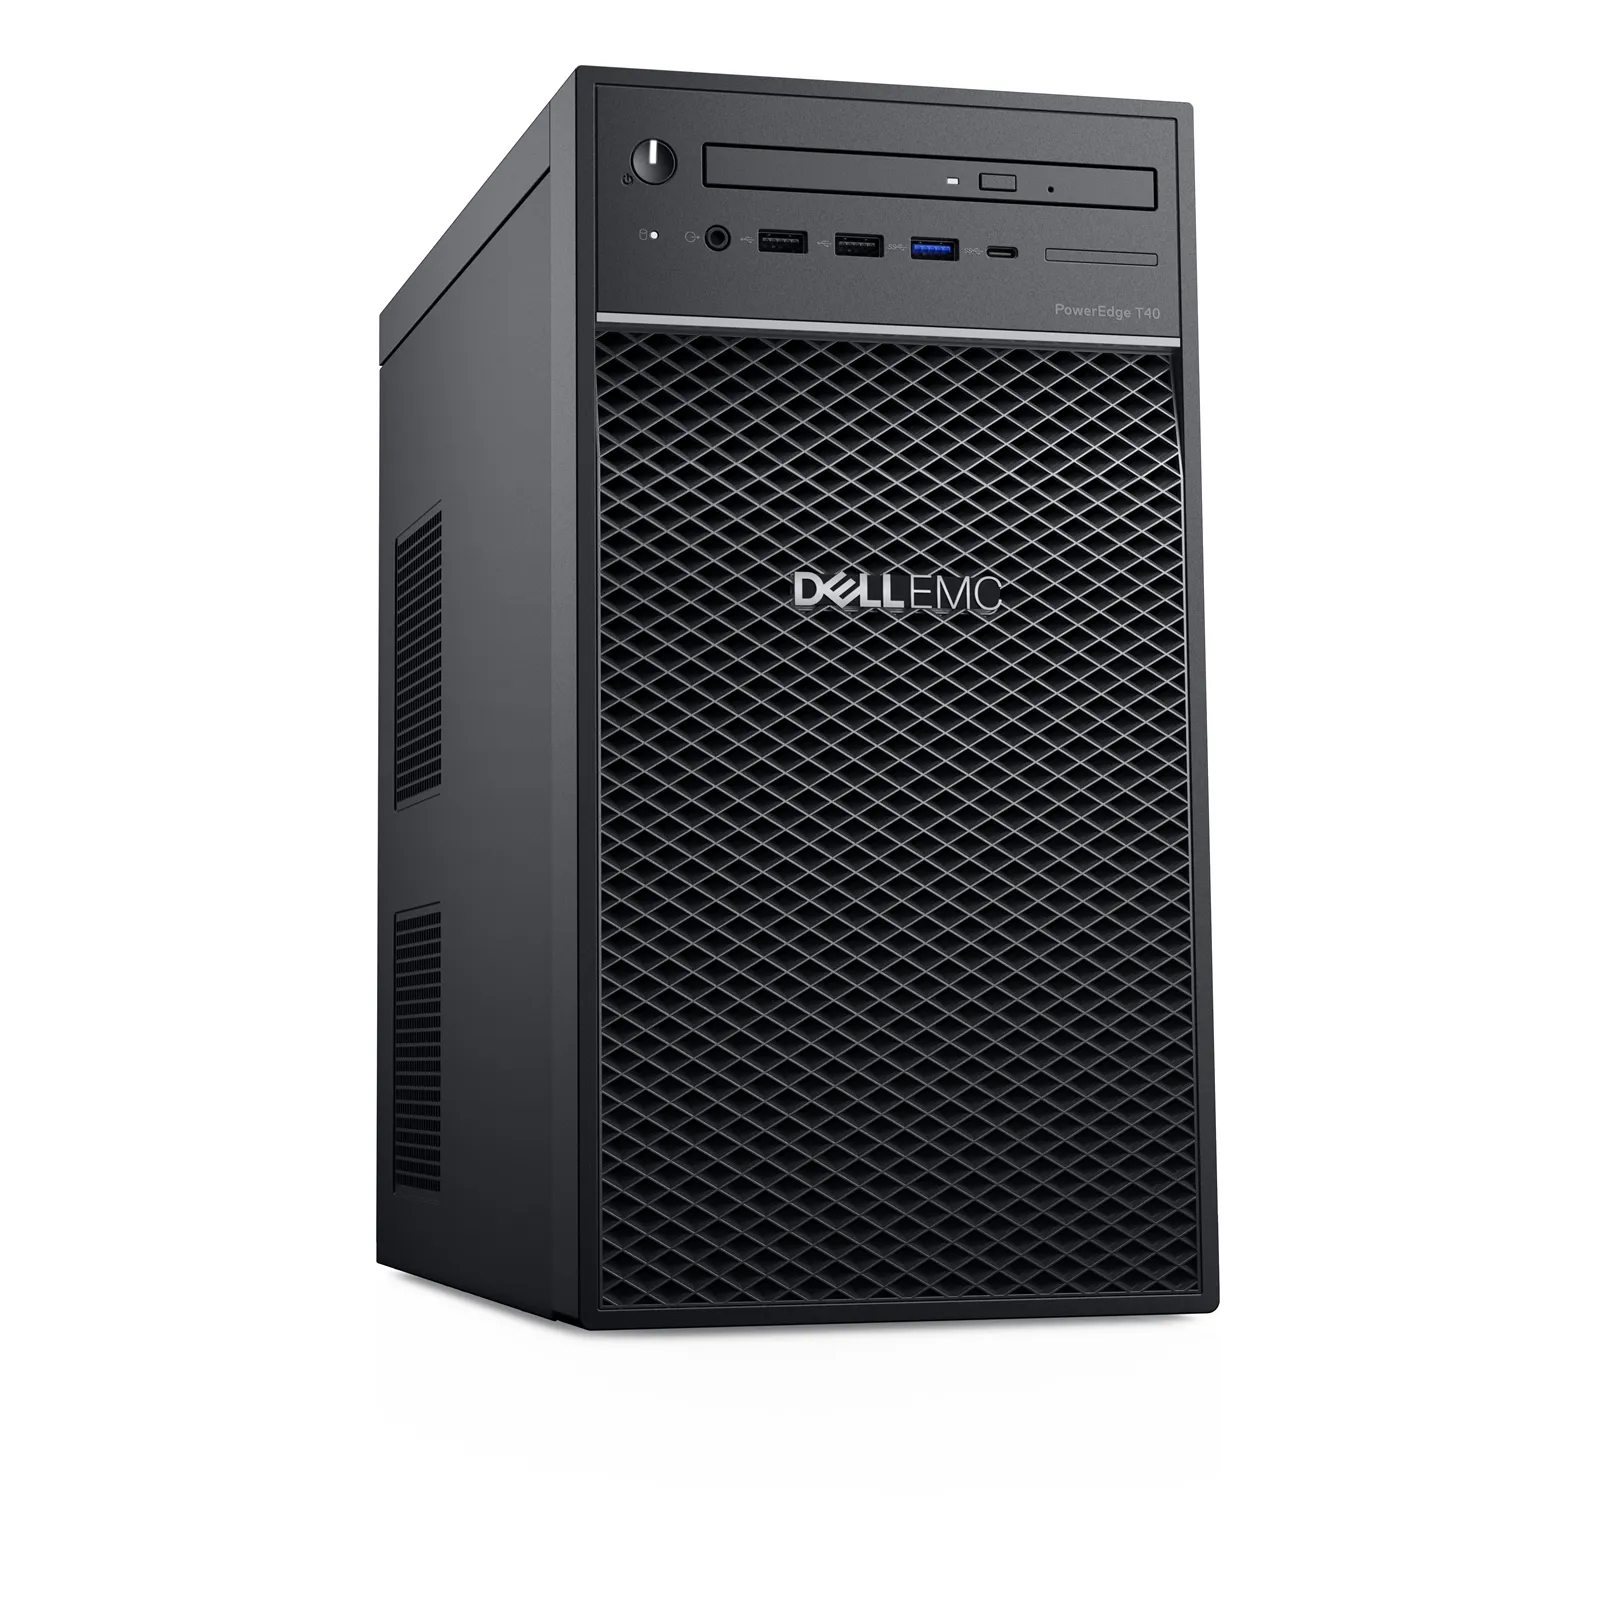 Дешевый сервер dells T40 мини-сервер компьютер сервер ПК